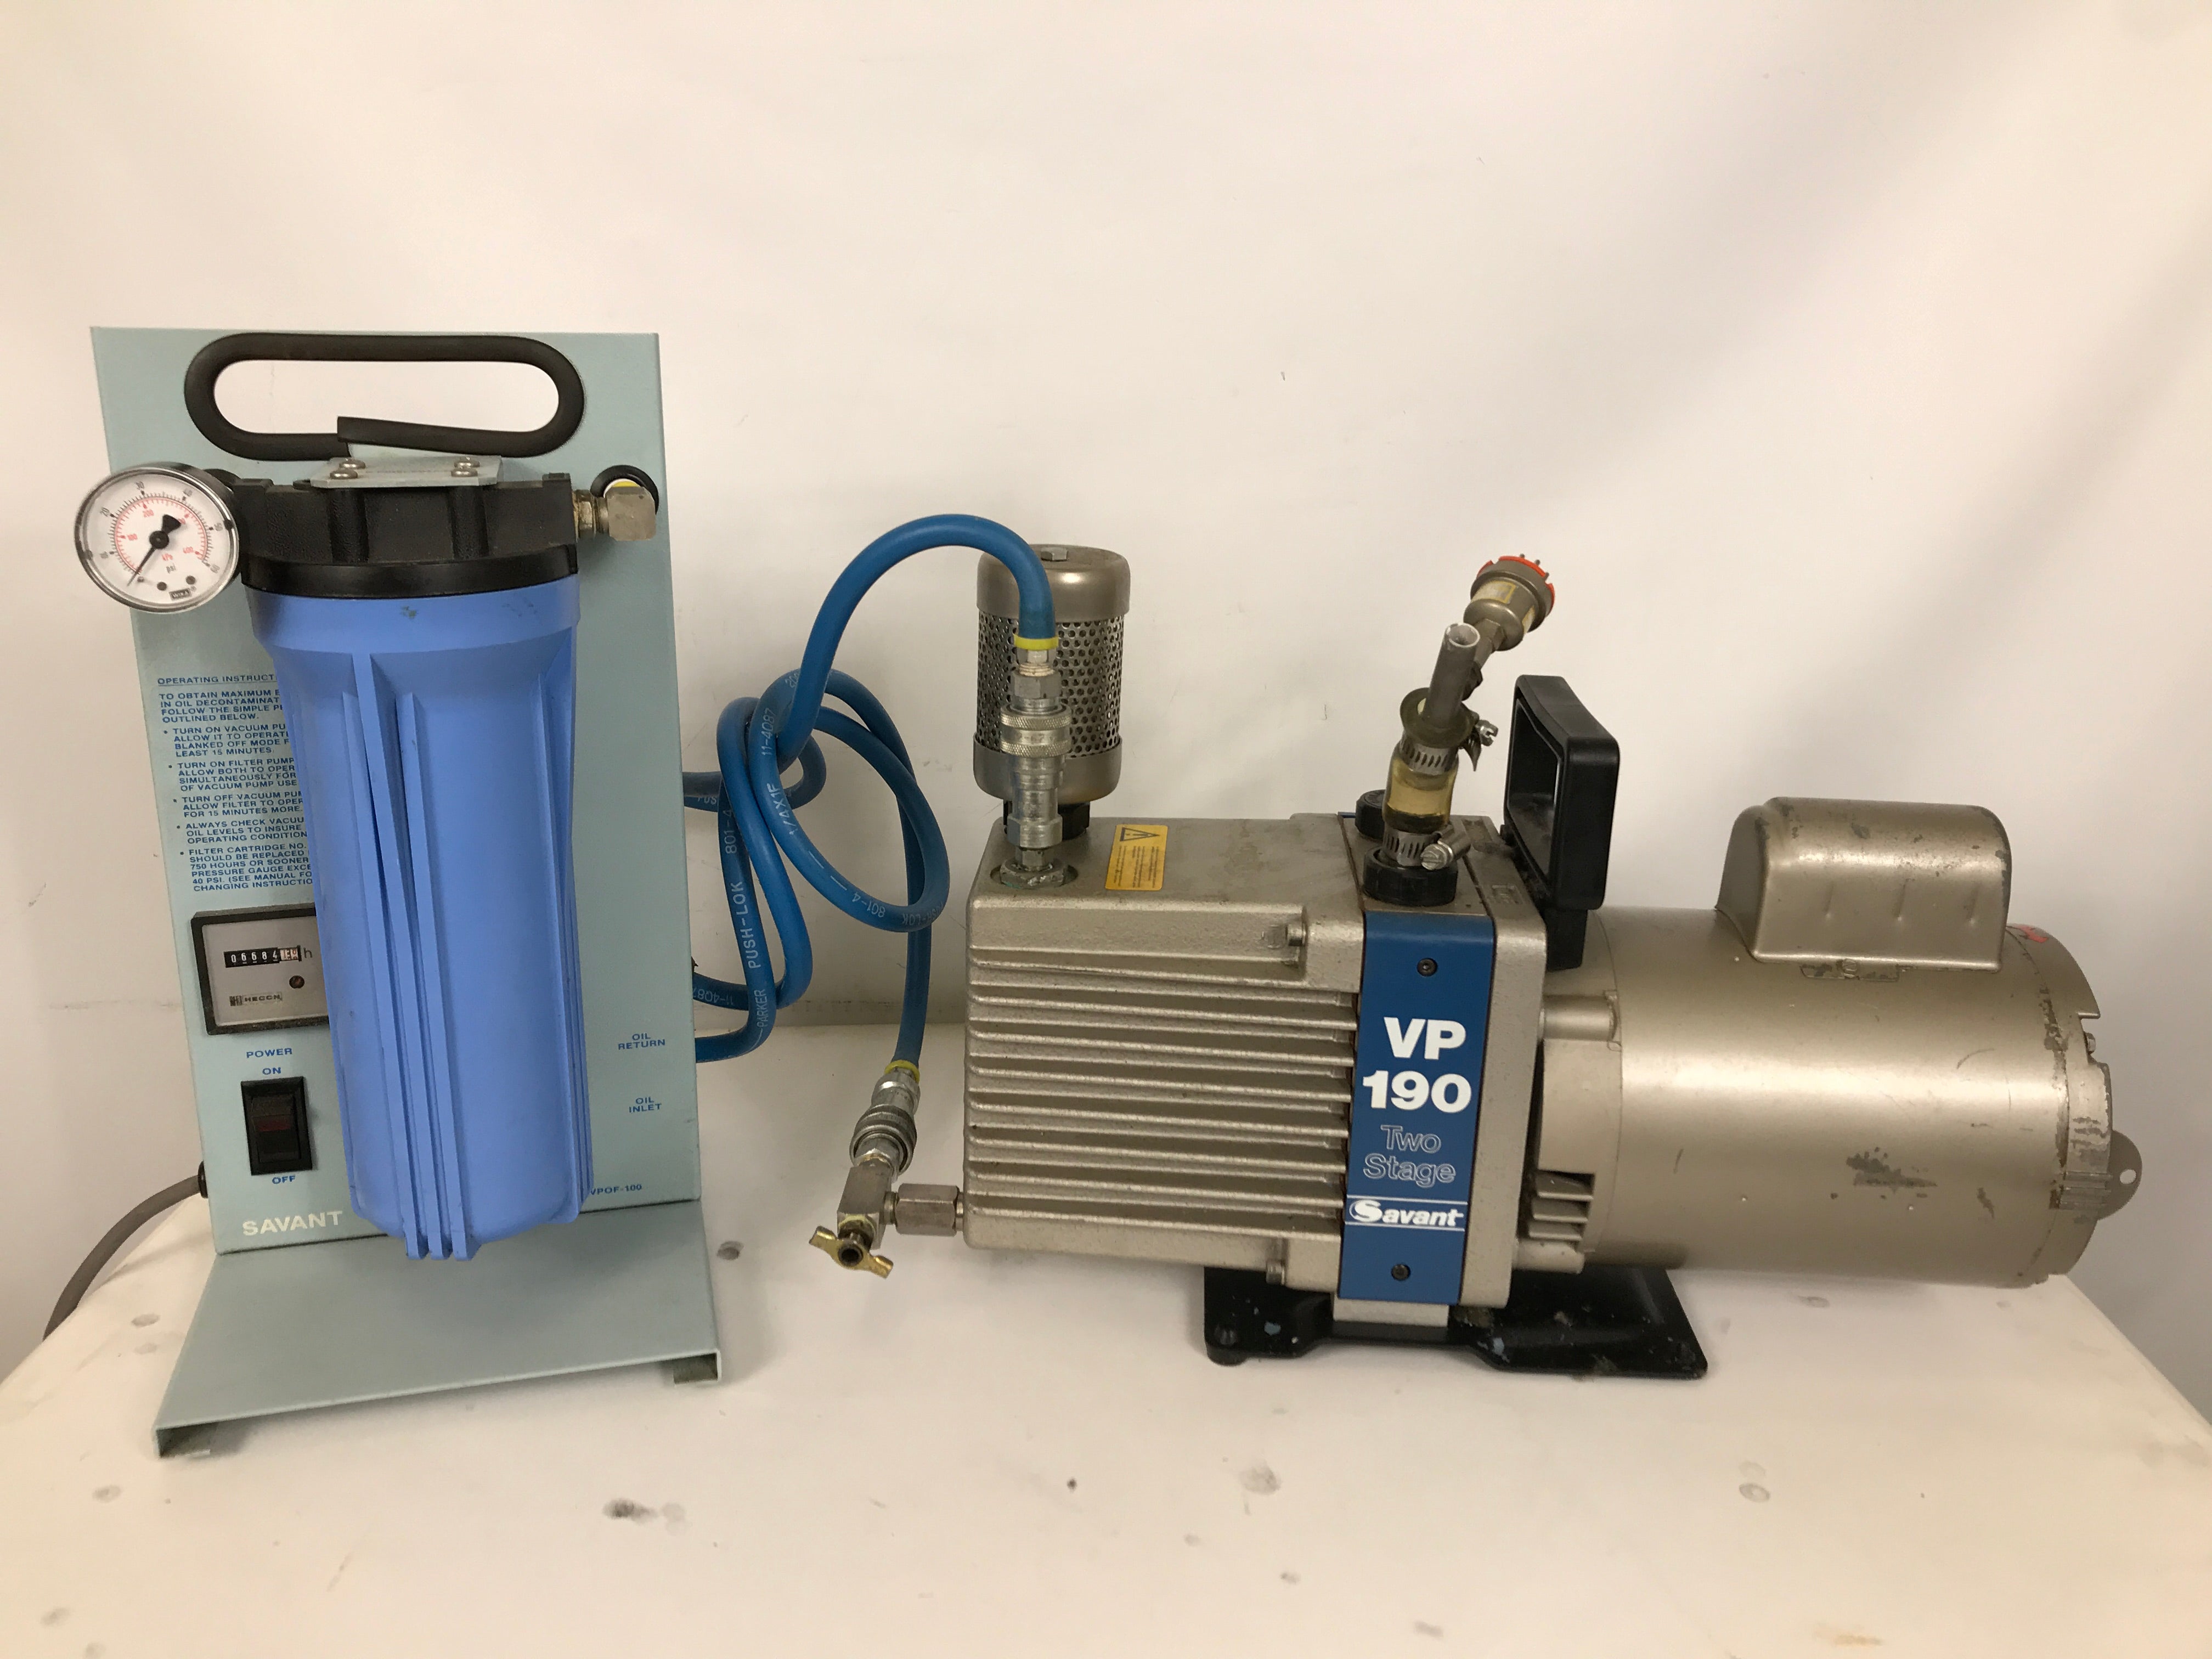 SAVANT VP 190 Two Stage High Vacuum Pump and Filter Pump